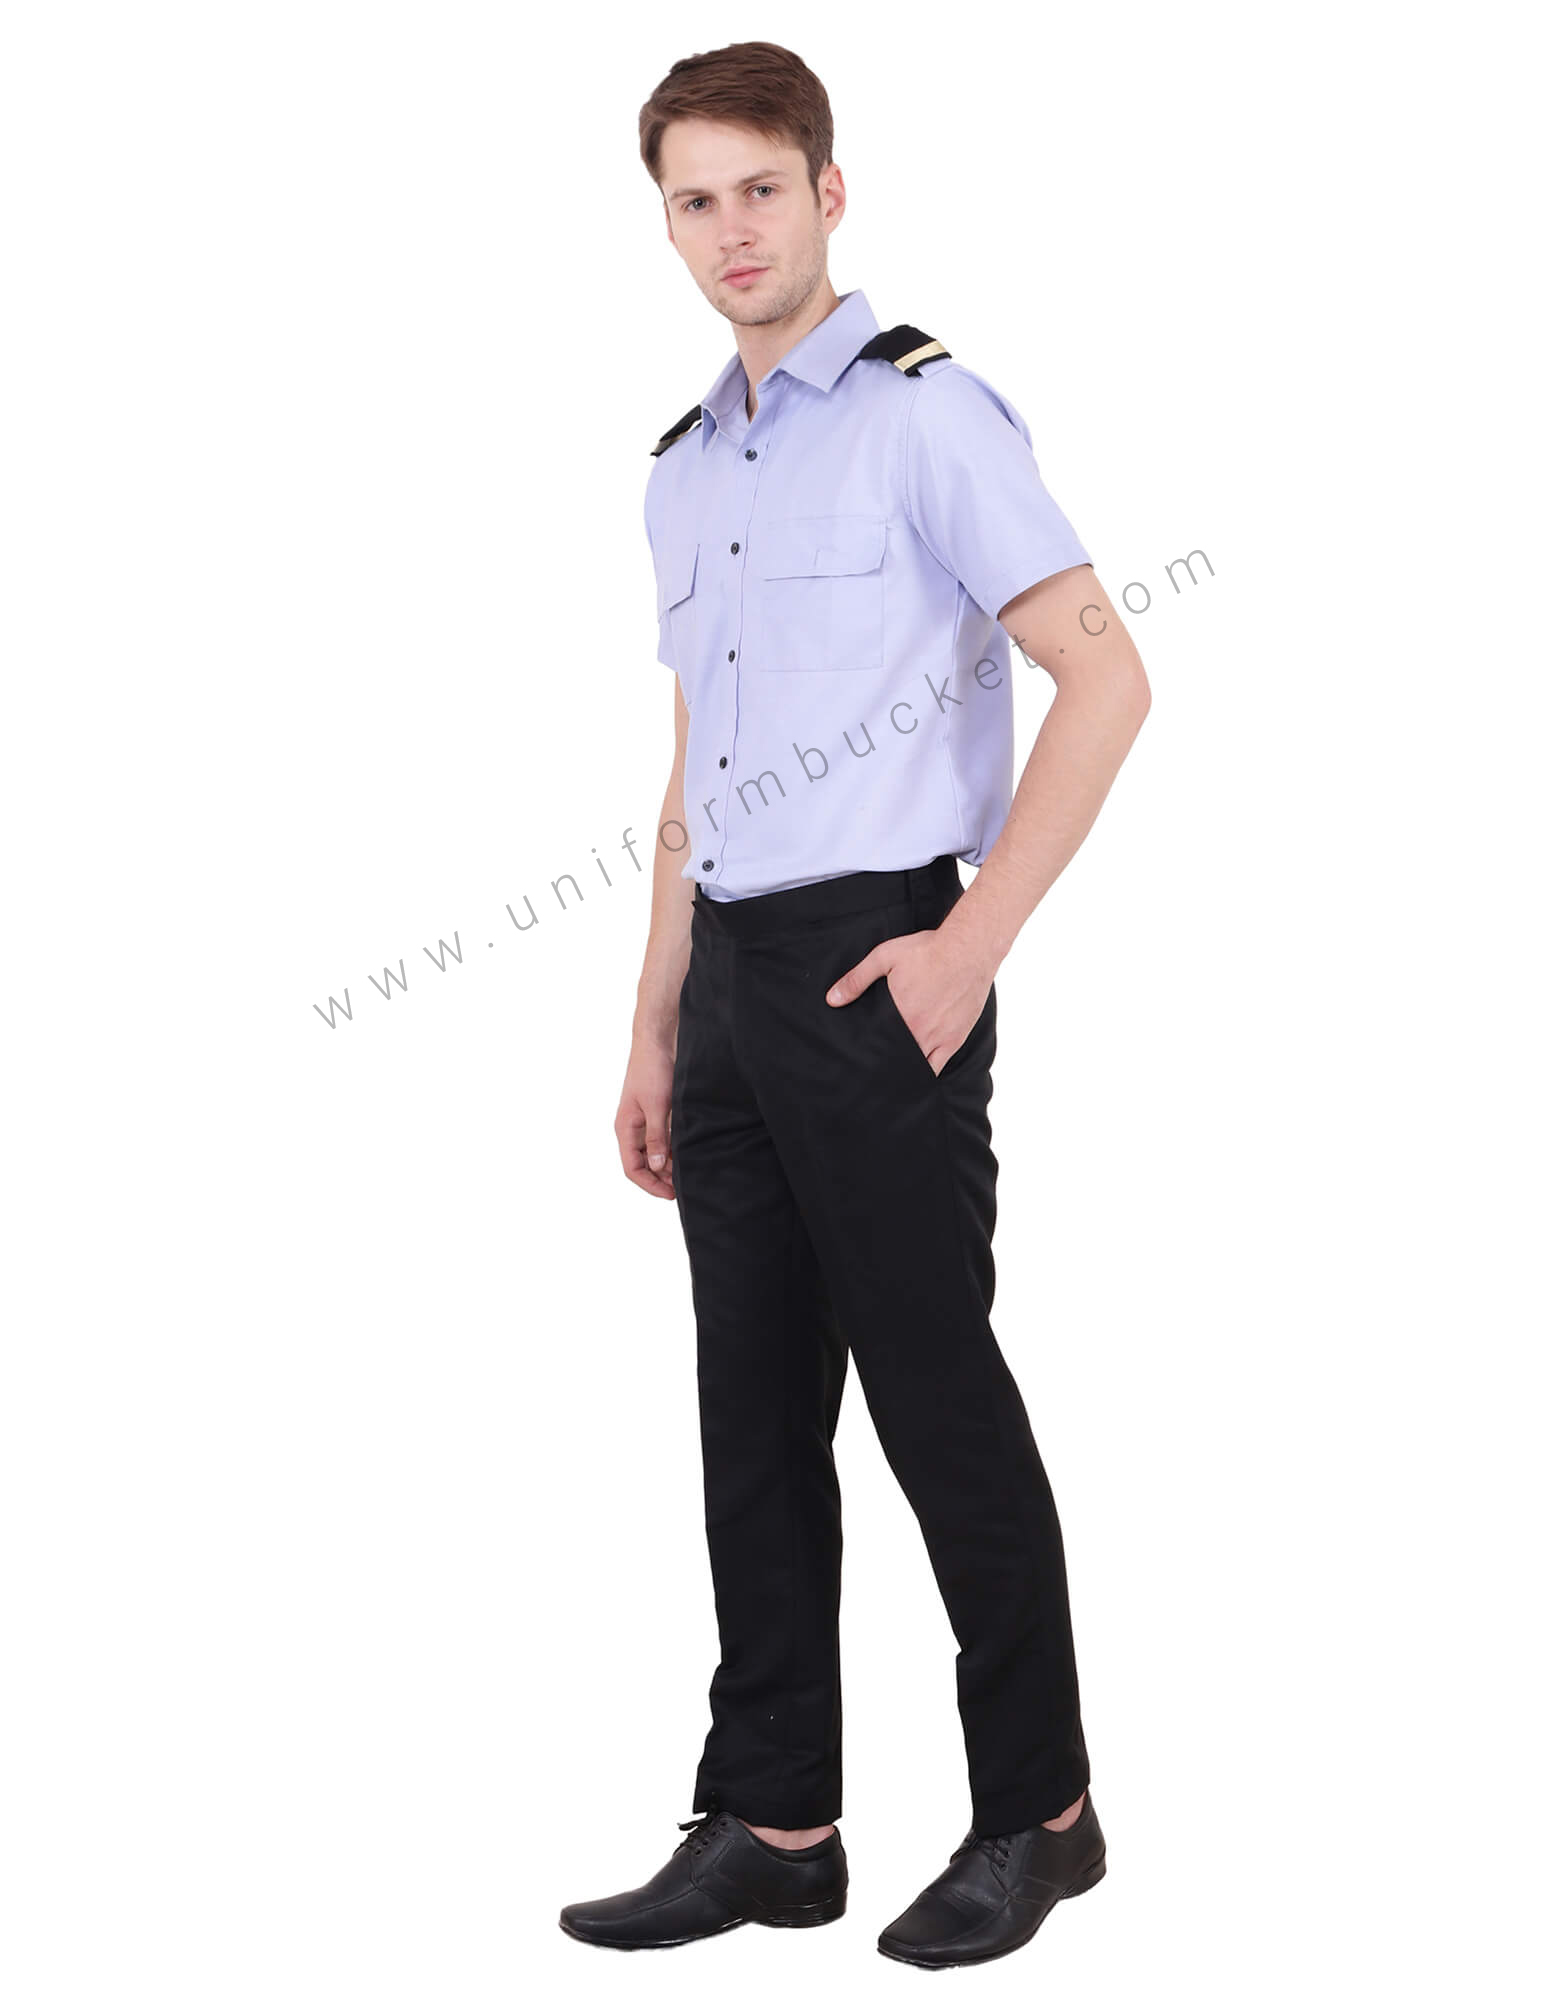 Blue Security Guard Shirt For Men